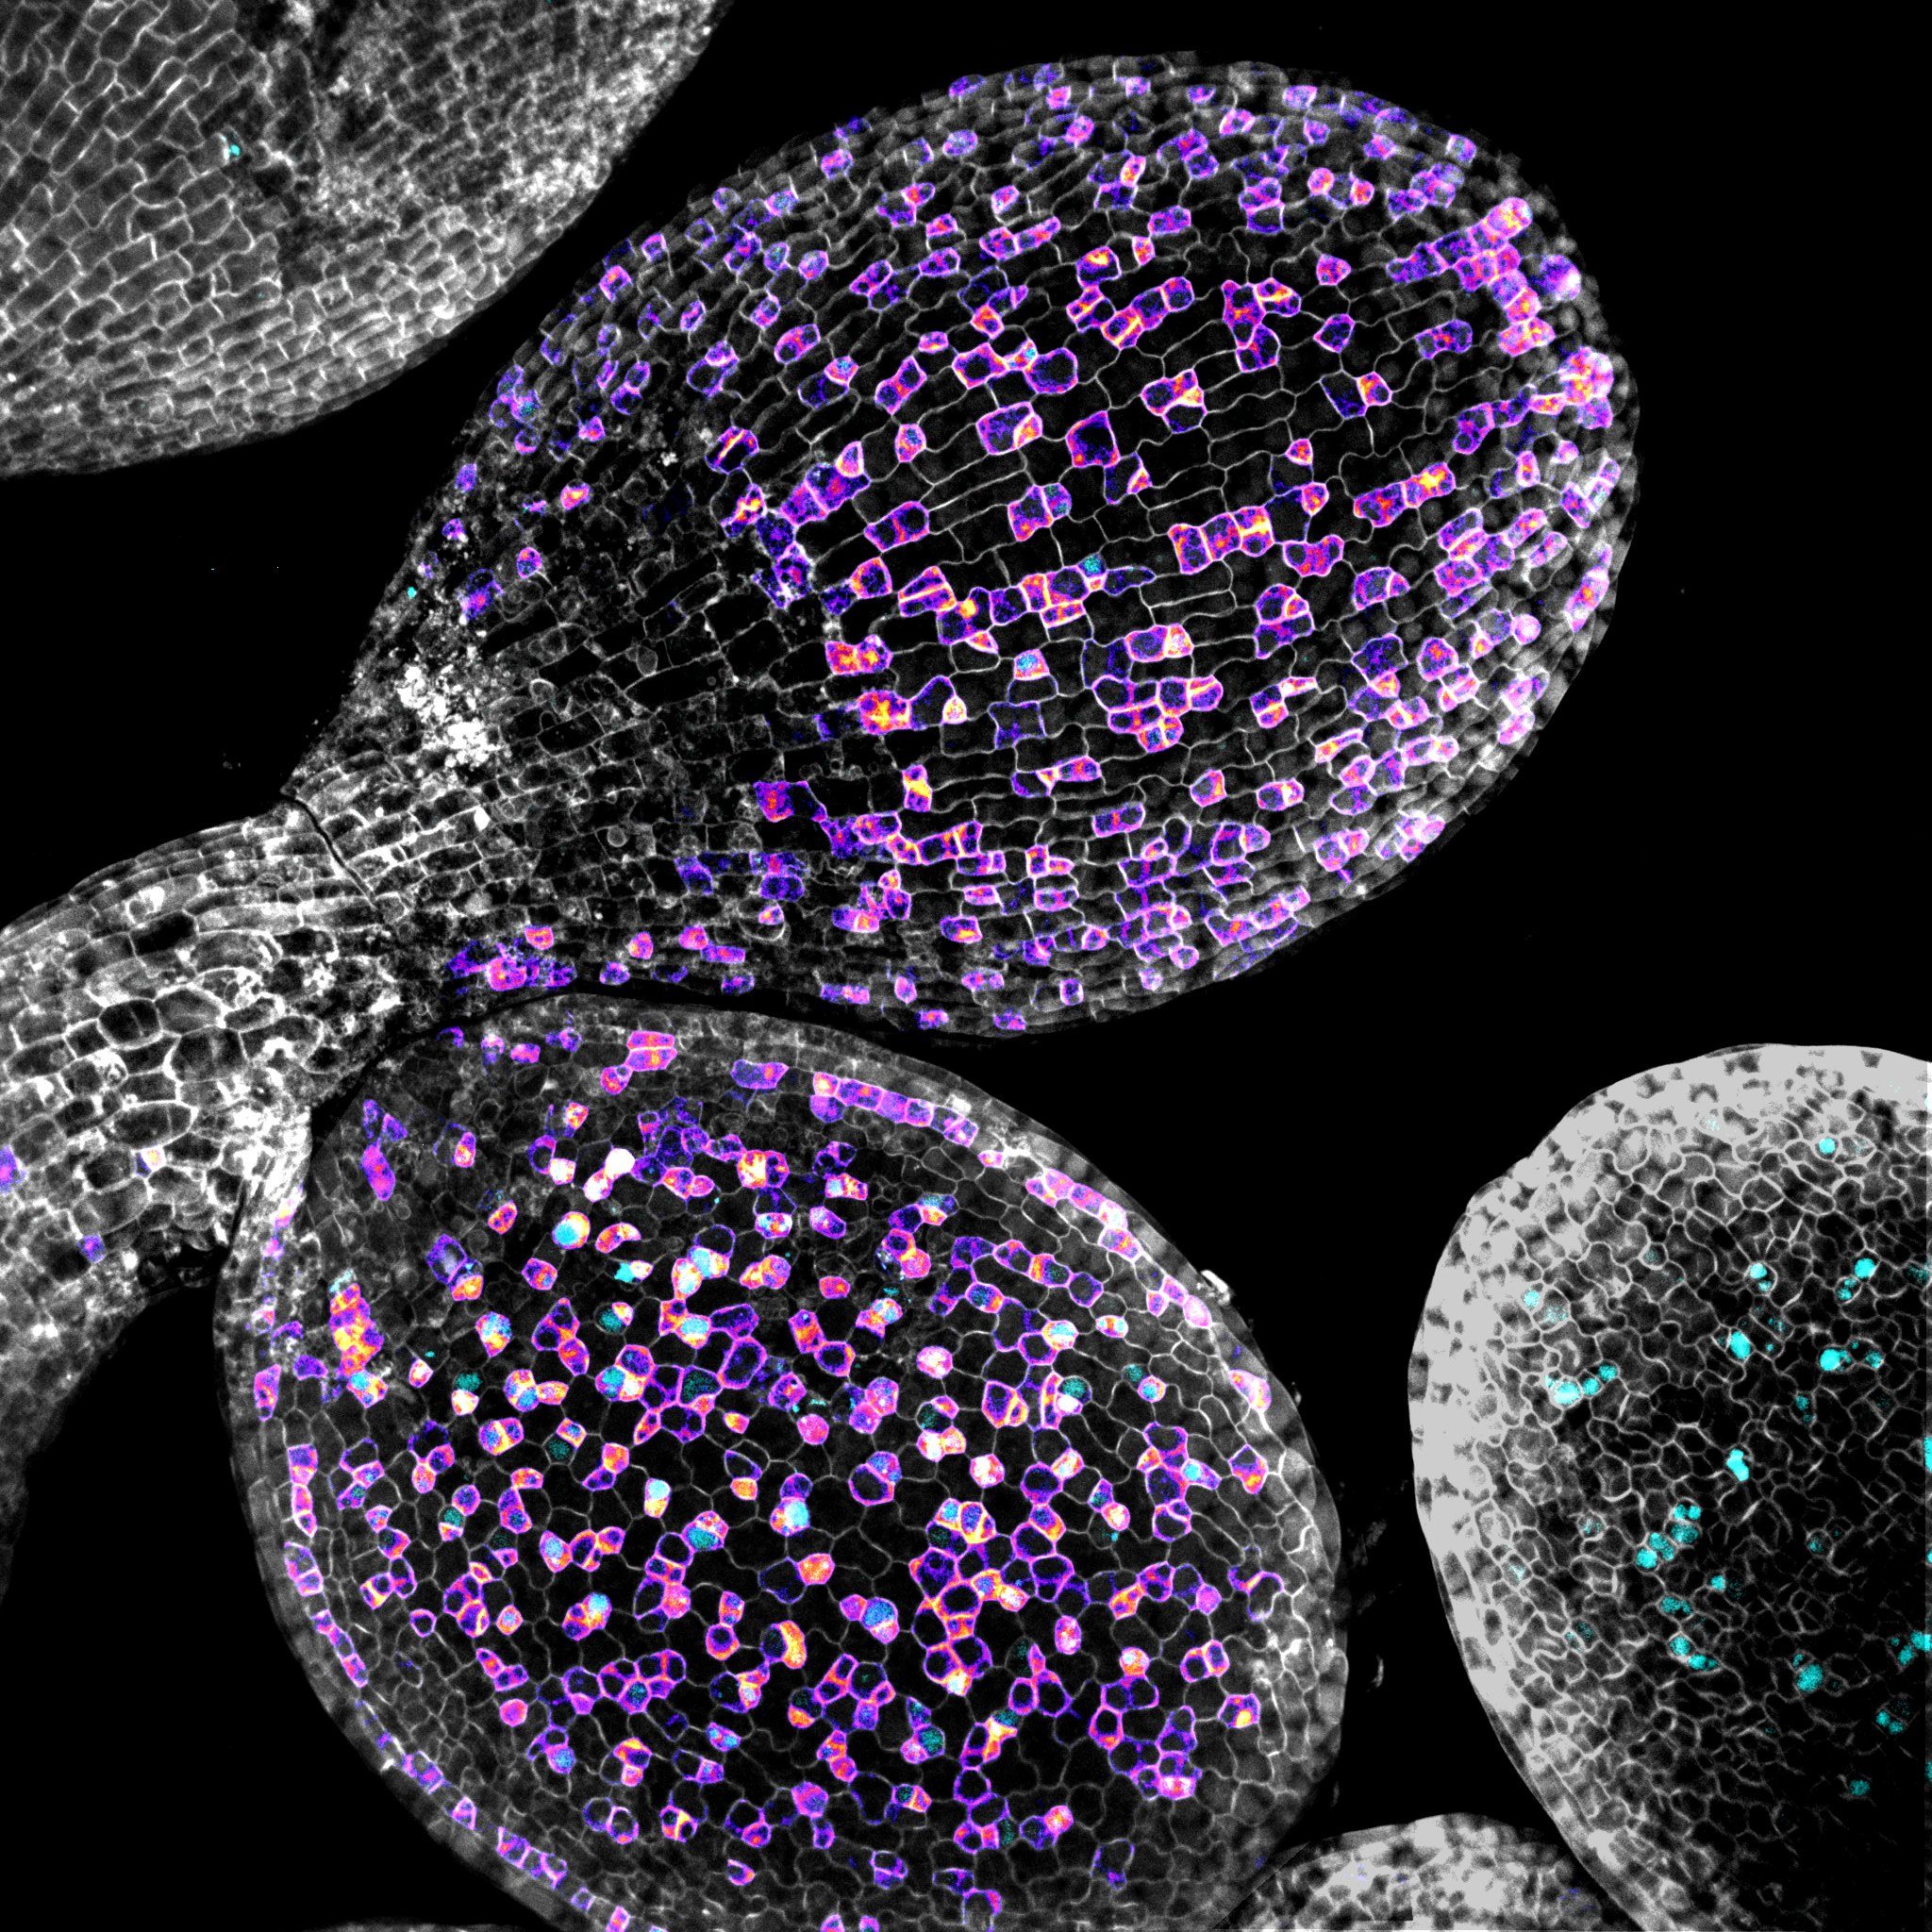 An Arabidopsis embryo epidermis being patterned - Margot Smit